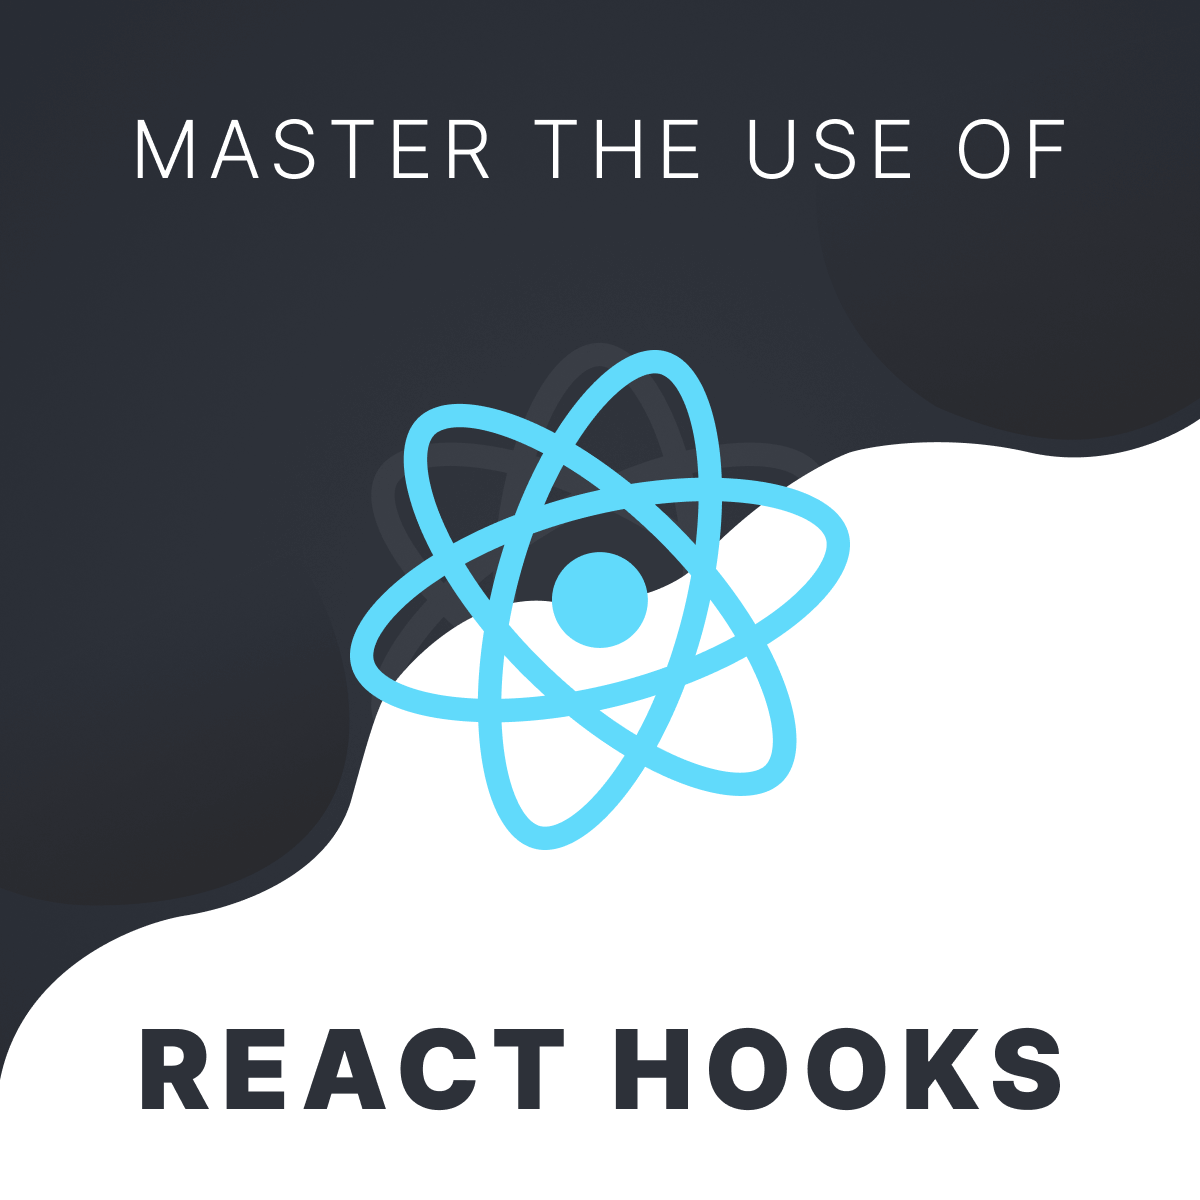 Master the use of React hooks